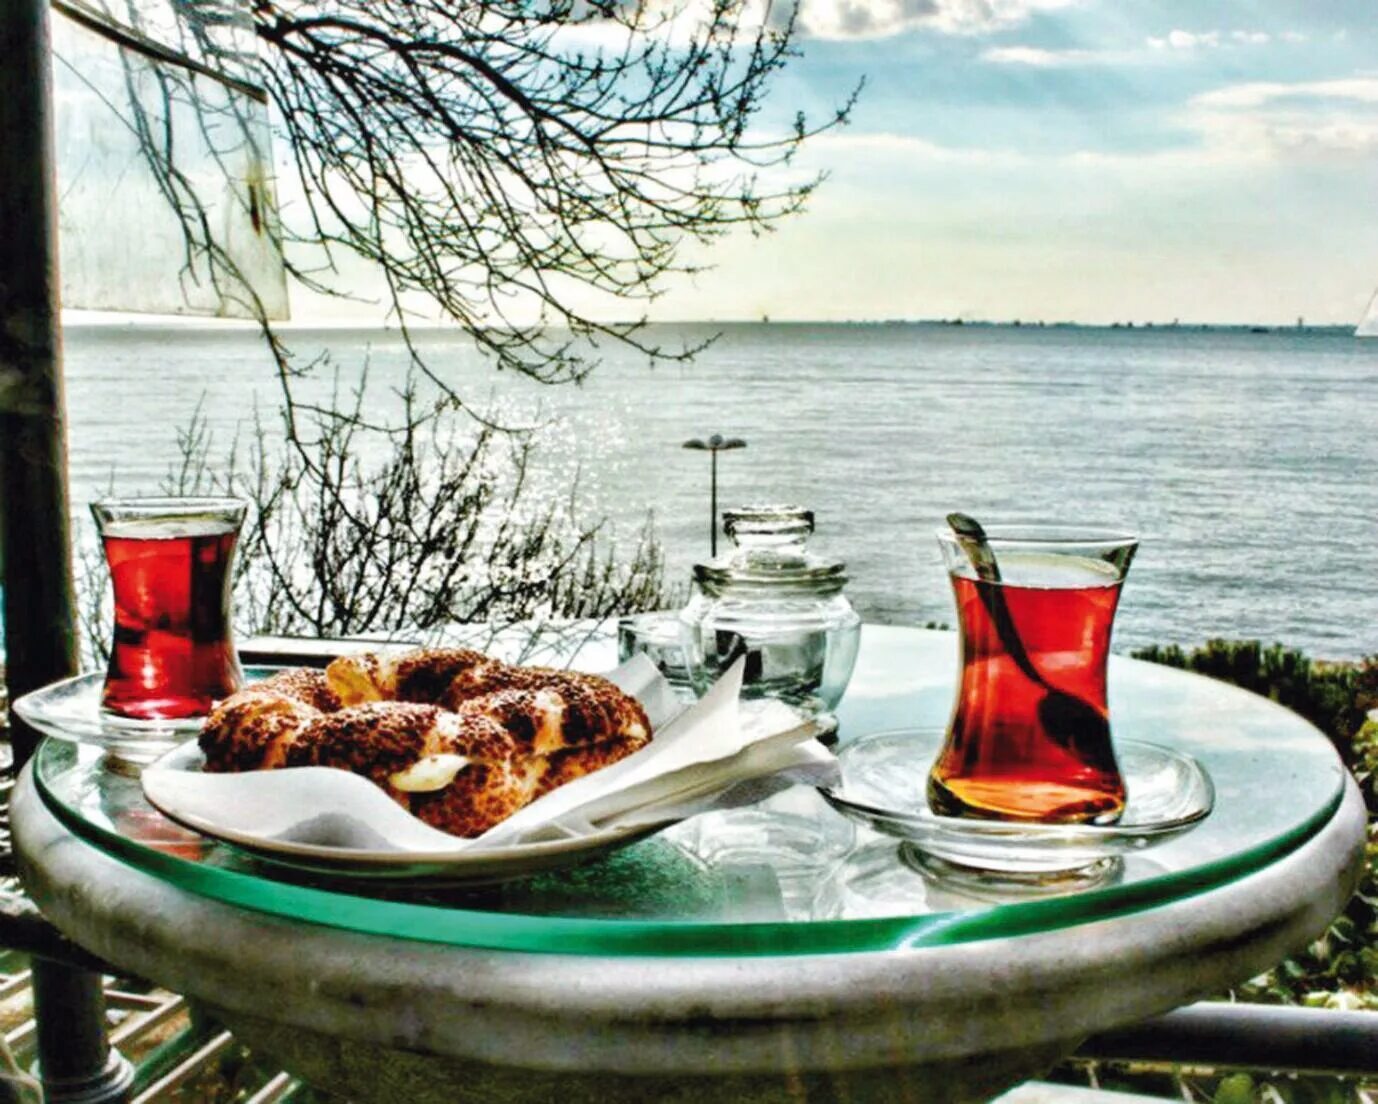 Доброе утро картинки на турецком языке мужчине. Чаепитие на корабле. Открытки с добрым утром на турецком. С добрым утром турецкий чай. С добрым утром Турция.